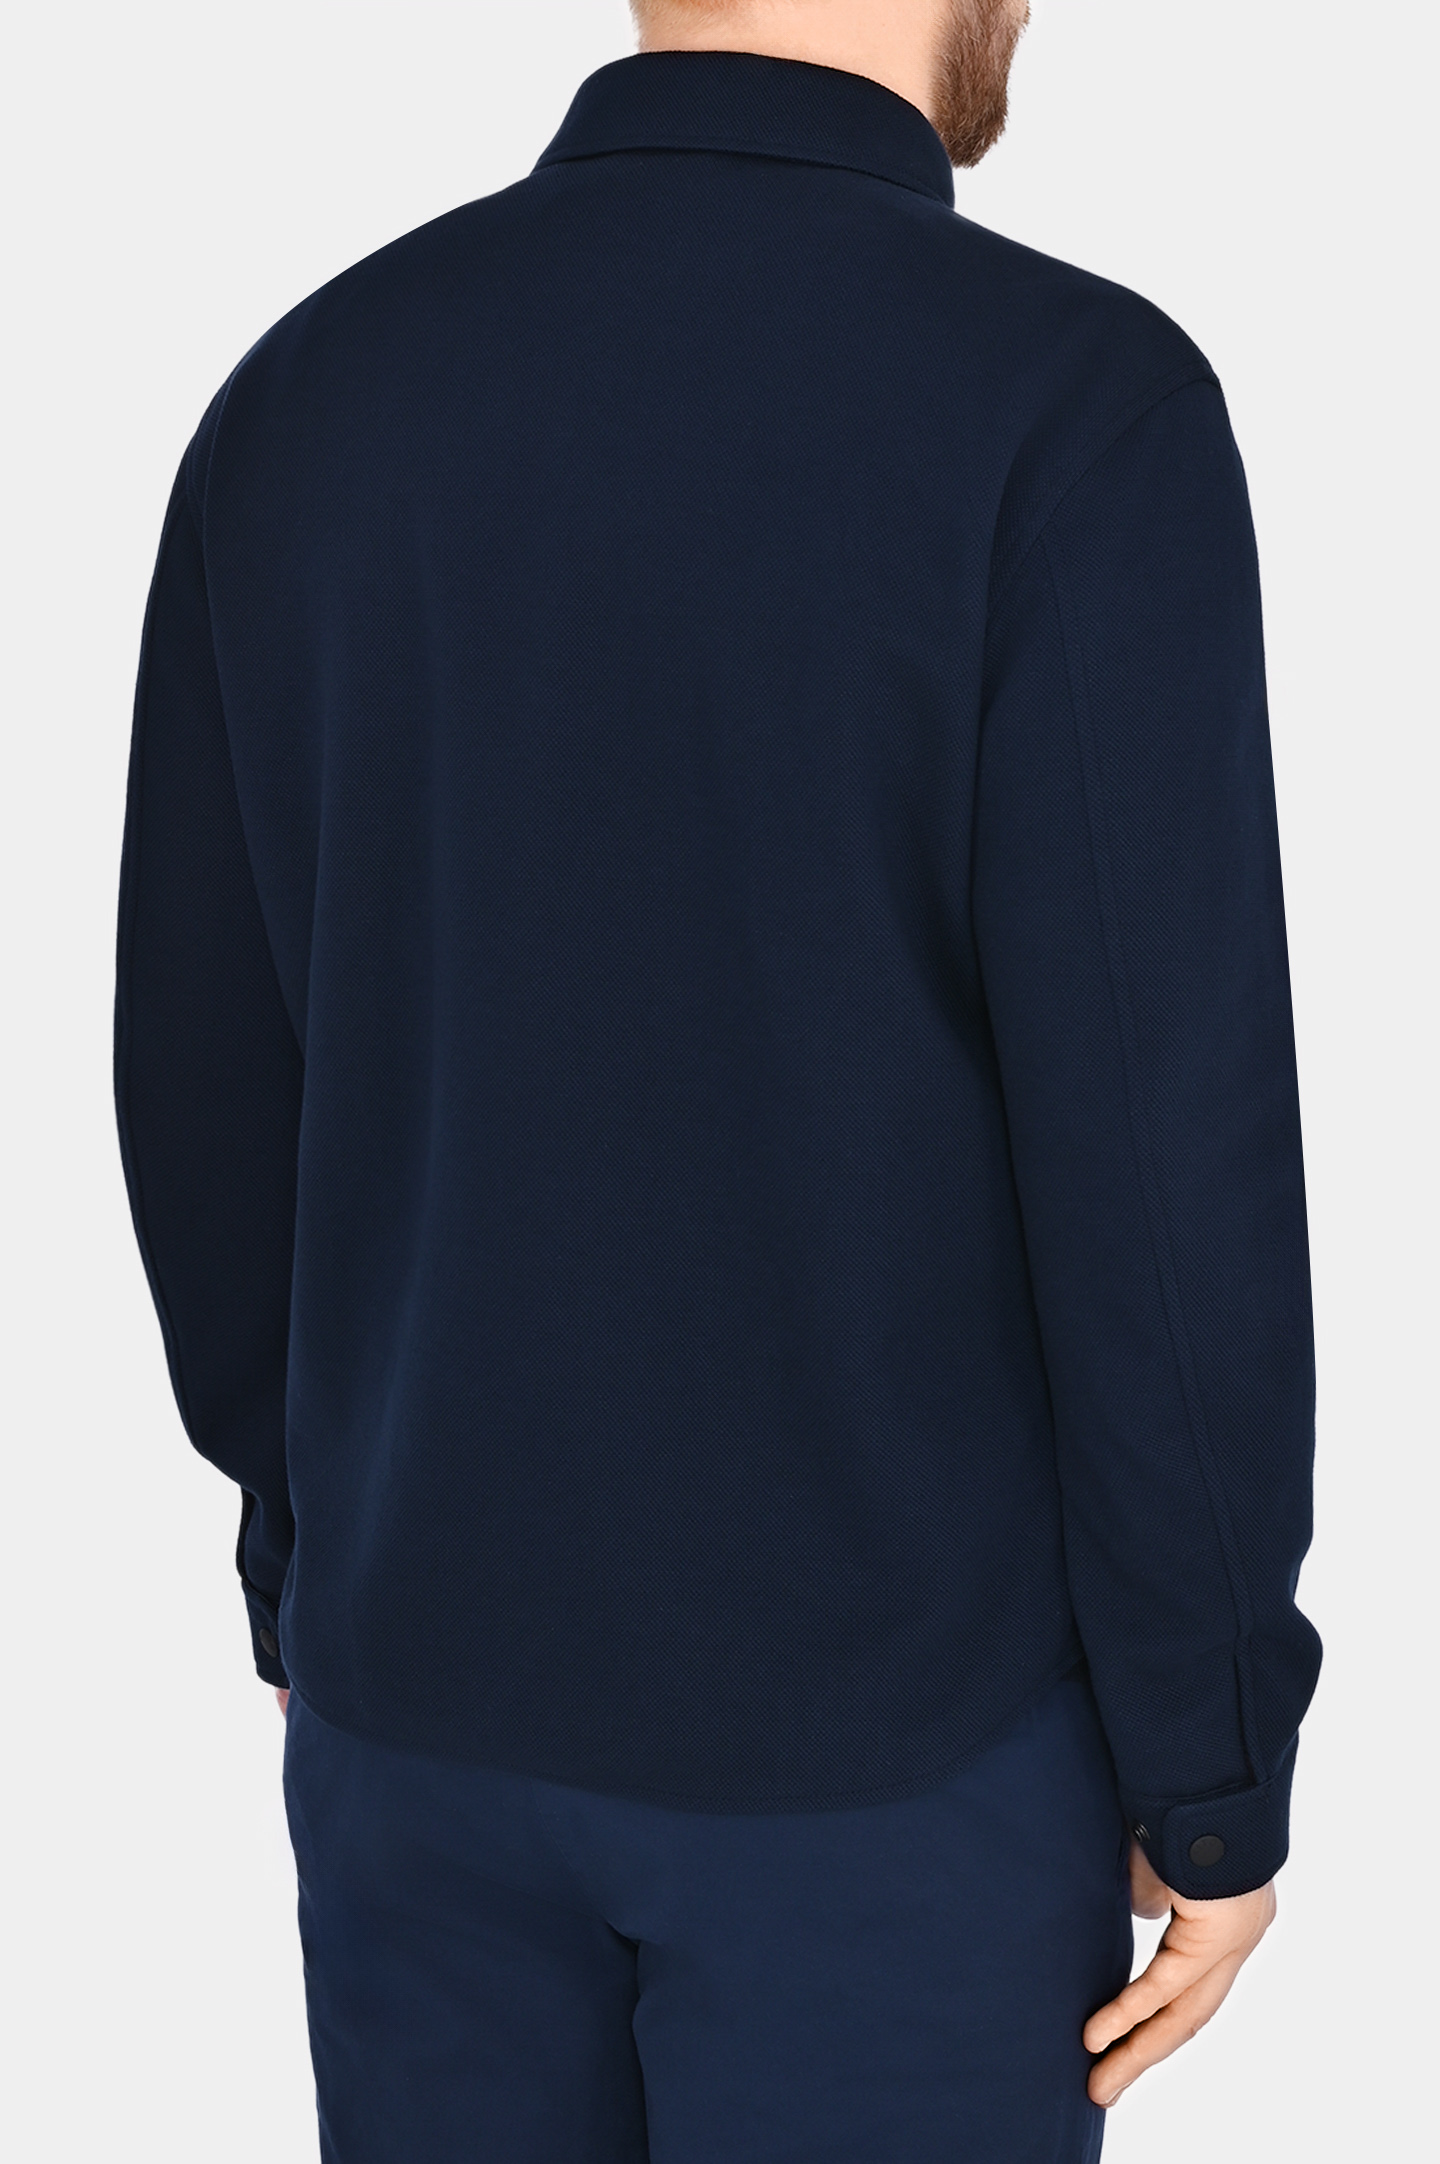 Куртка на кнопках с карманами KITON UW1828V0851C0, цвет: Темно-синий, Мужской